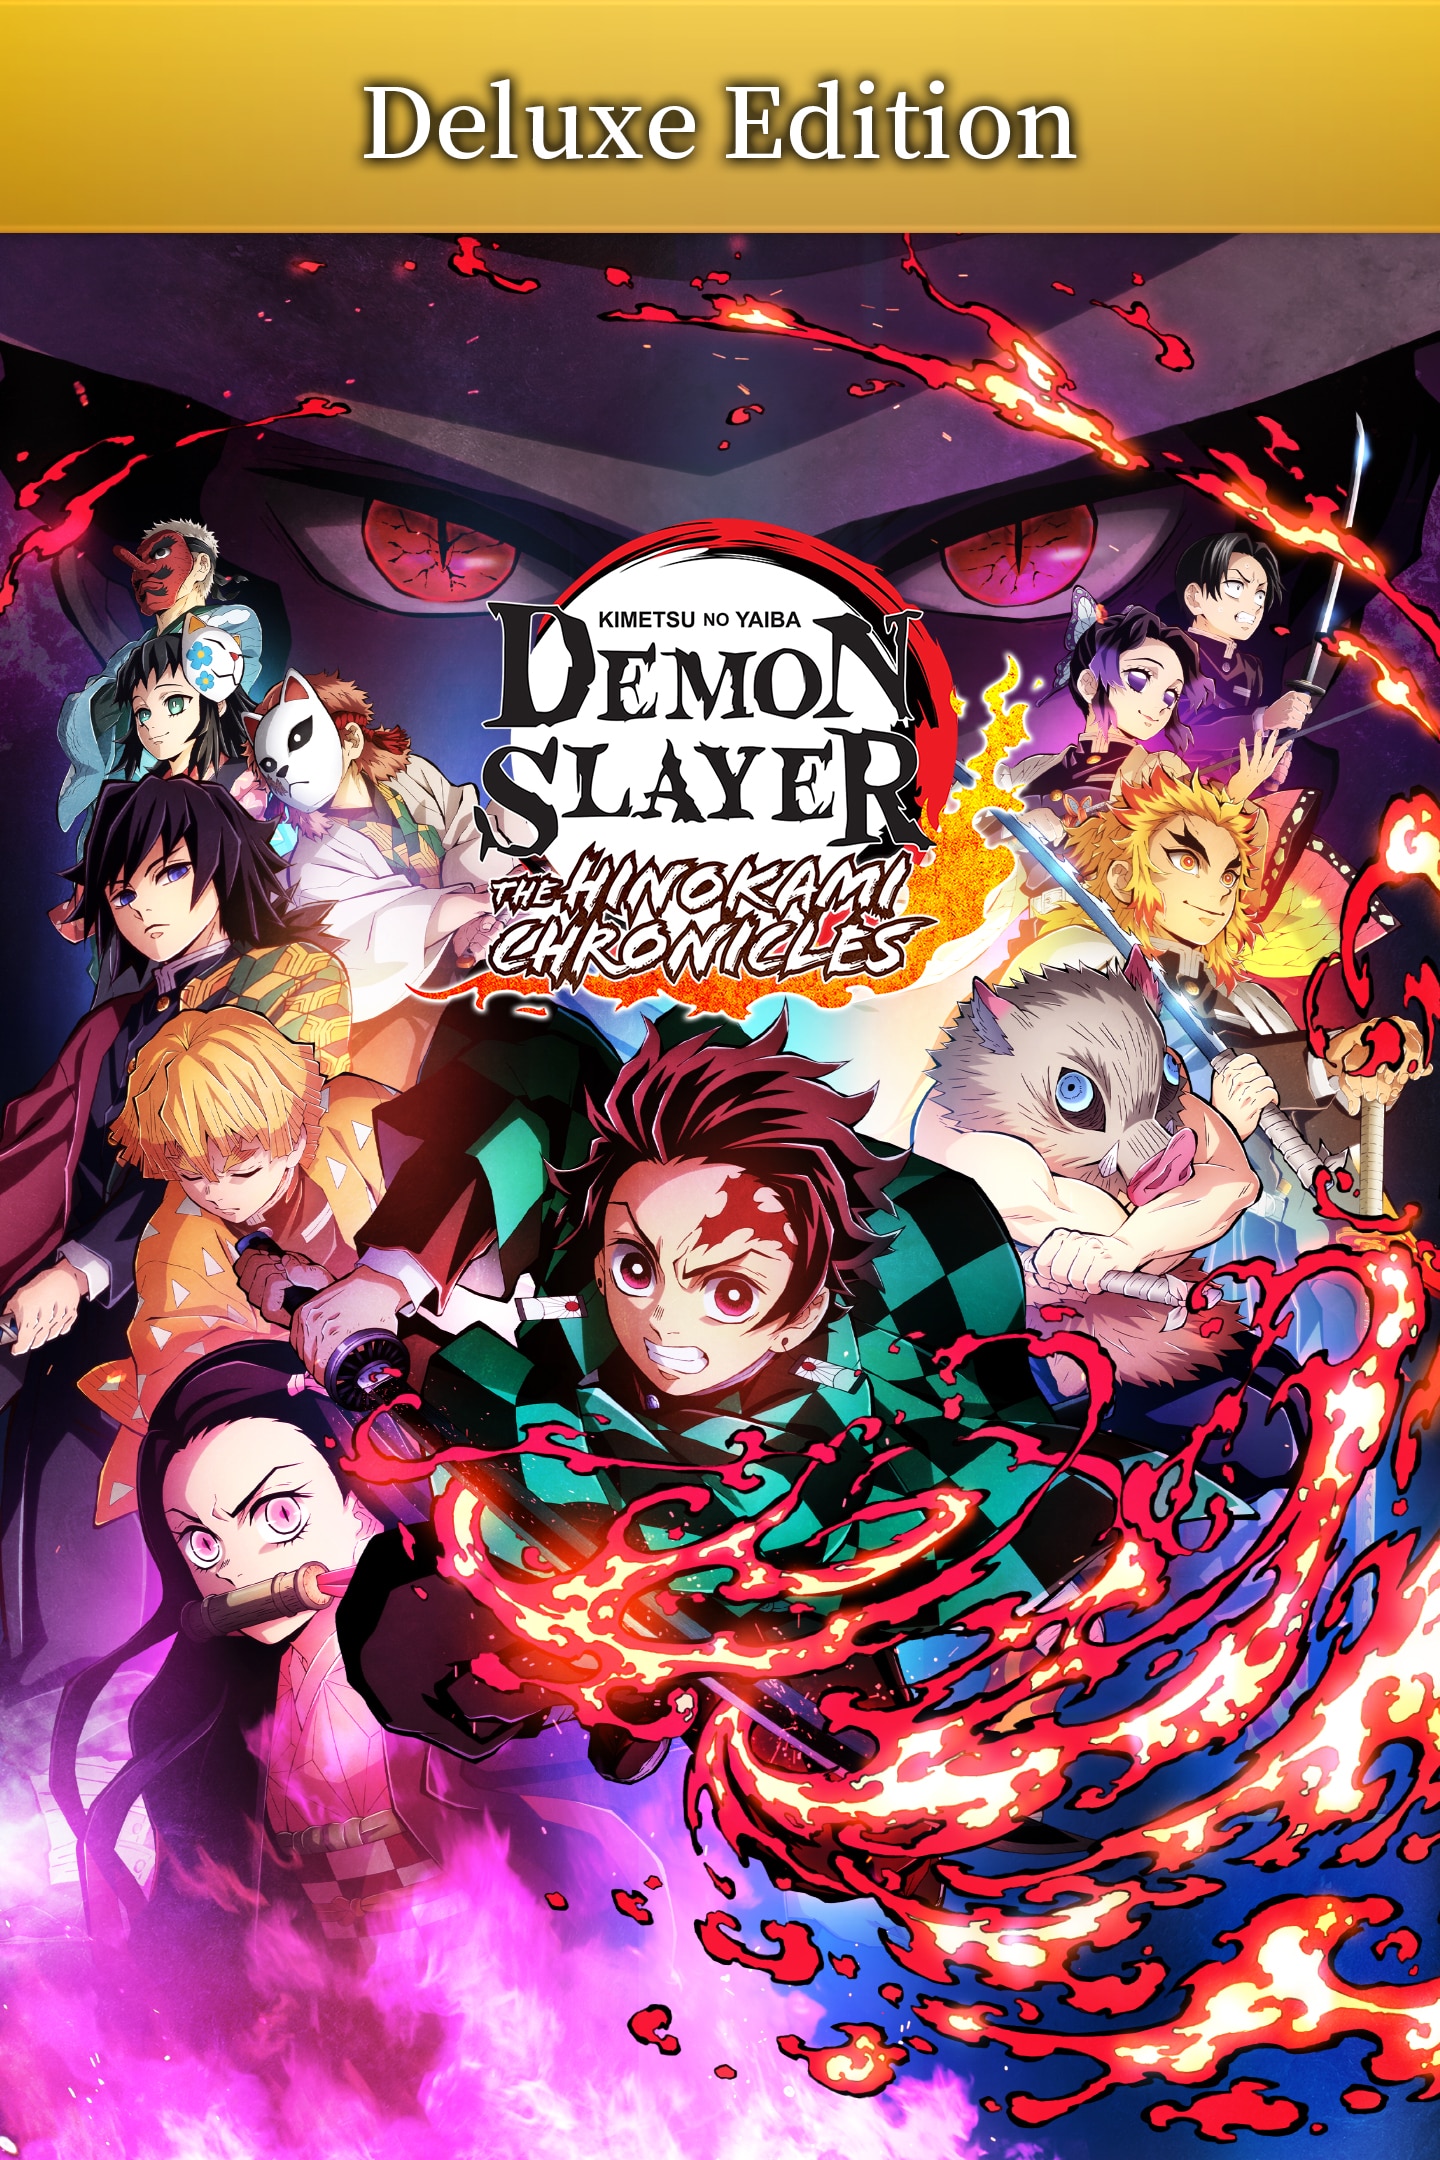 Demon Slayer -Kimetsu no Yaiba- The Hinokami Chronicles Deluxe Edition PS4 & PS5